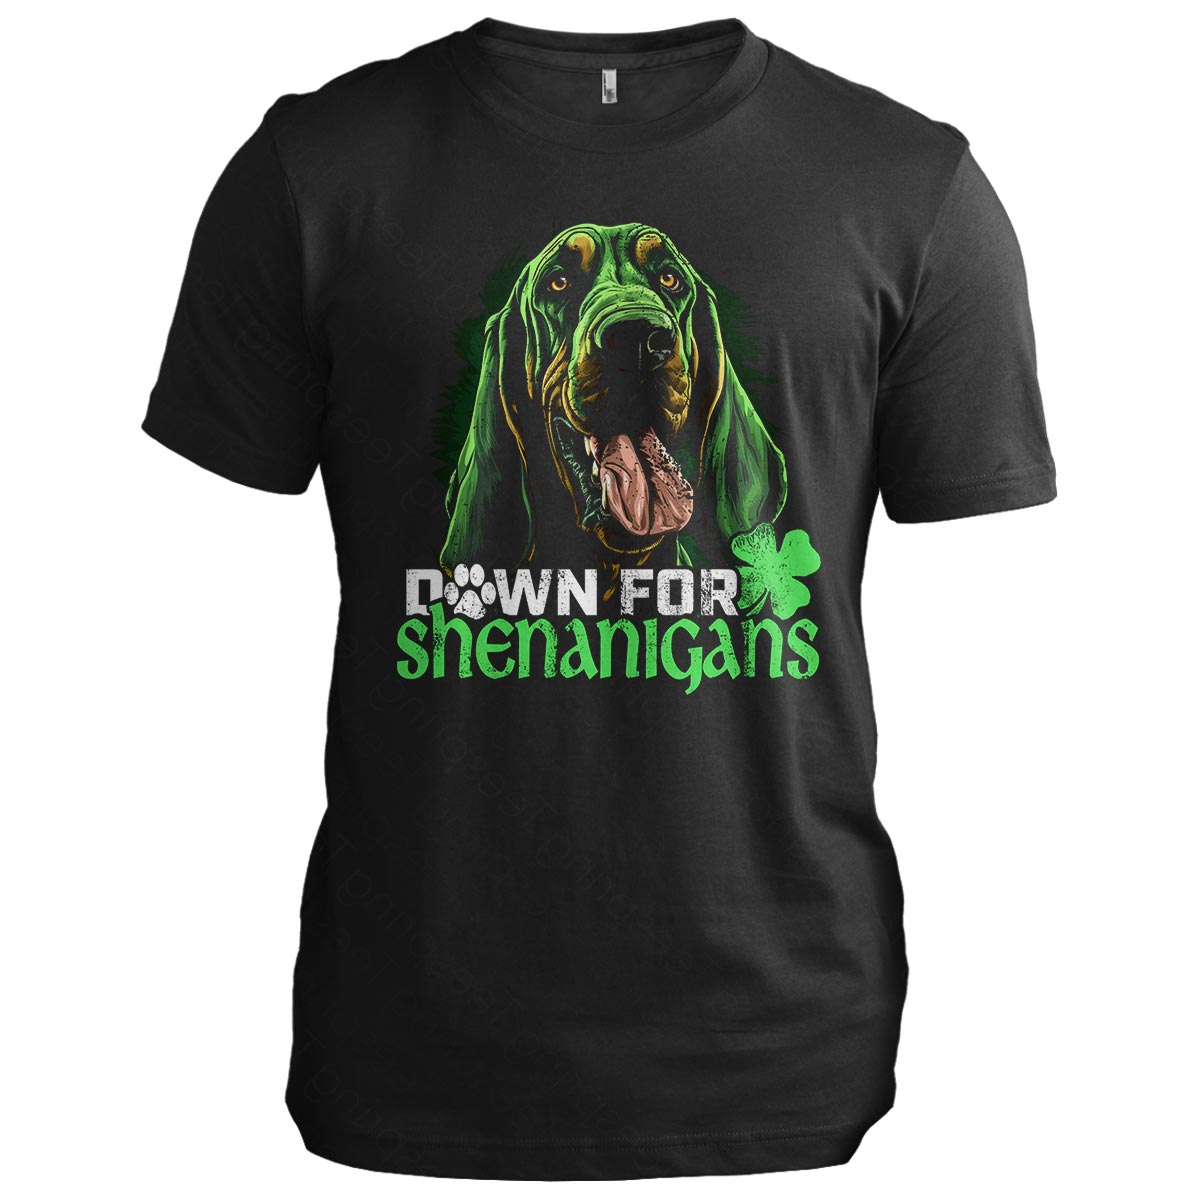 Down for Shenanigans: Bloodhound